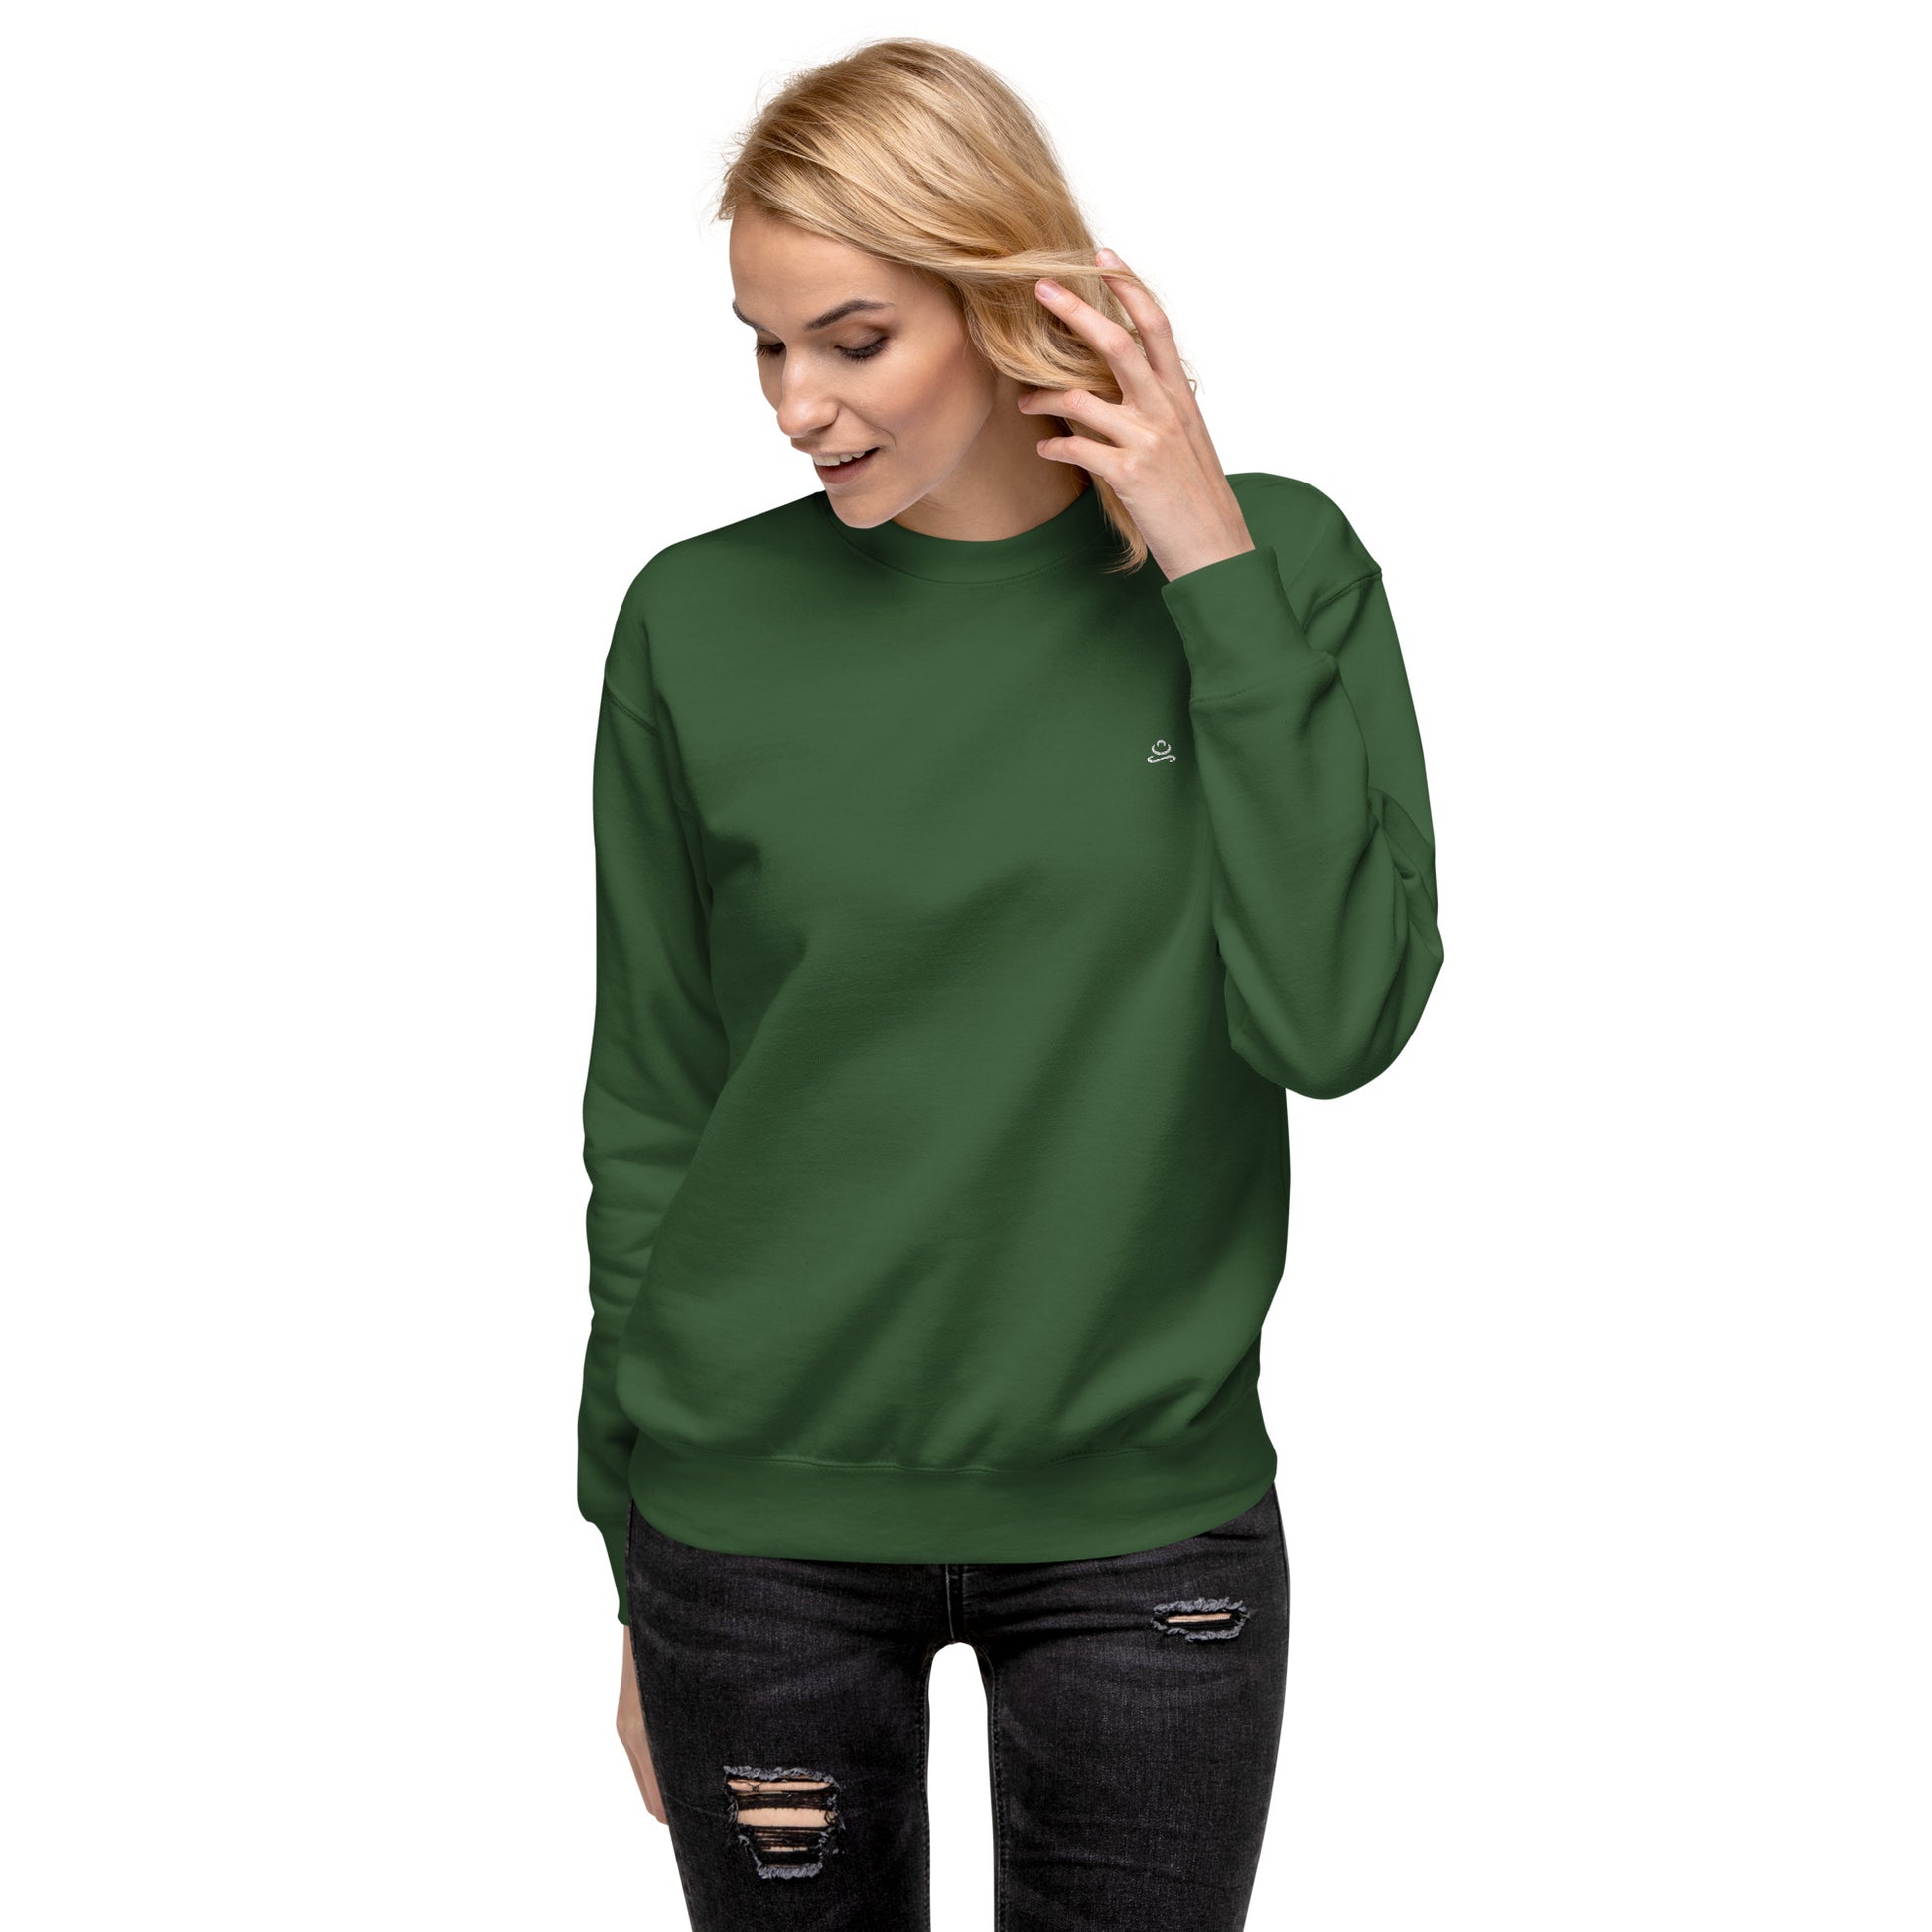 Forest Green Women's Premium Cotton Sweatshirt by Women's Premium Cotton Sweatshirt sold by Jain Yoga